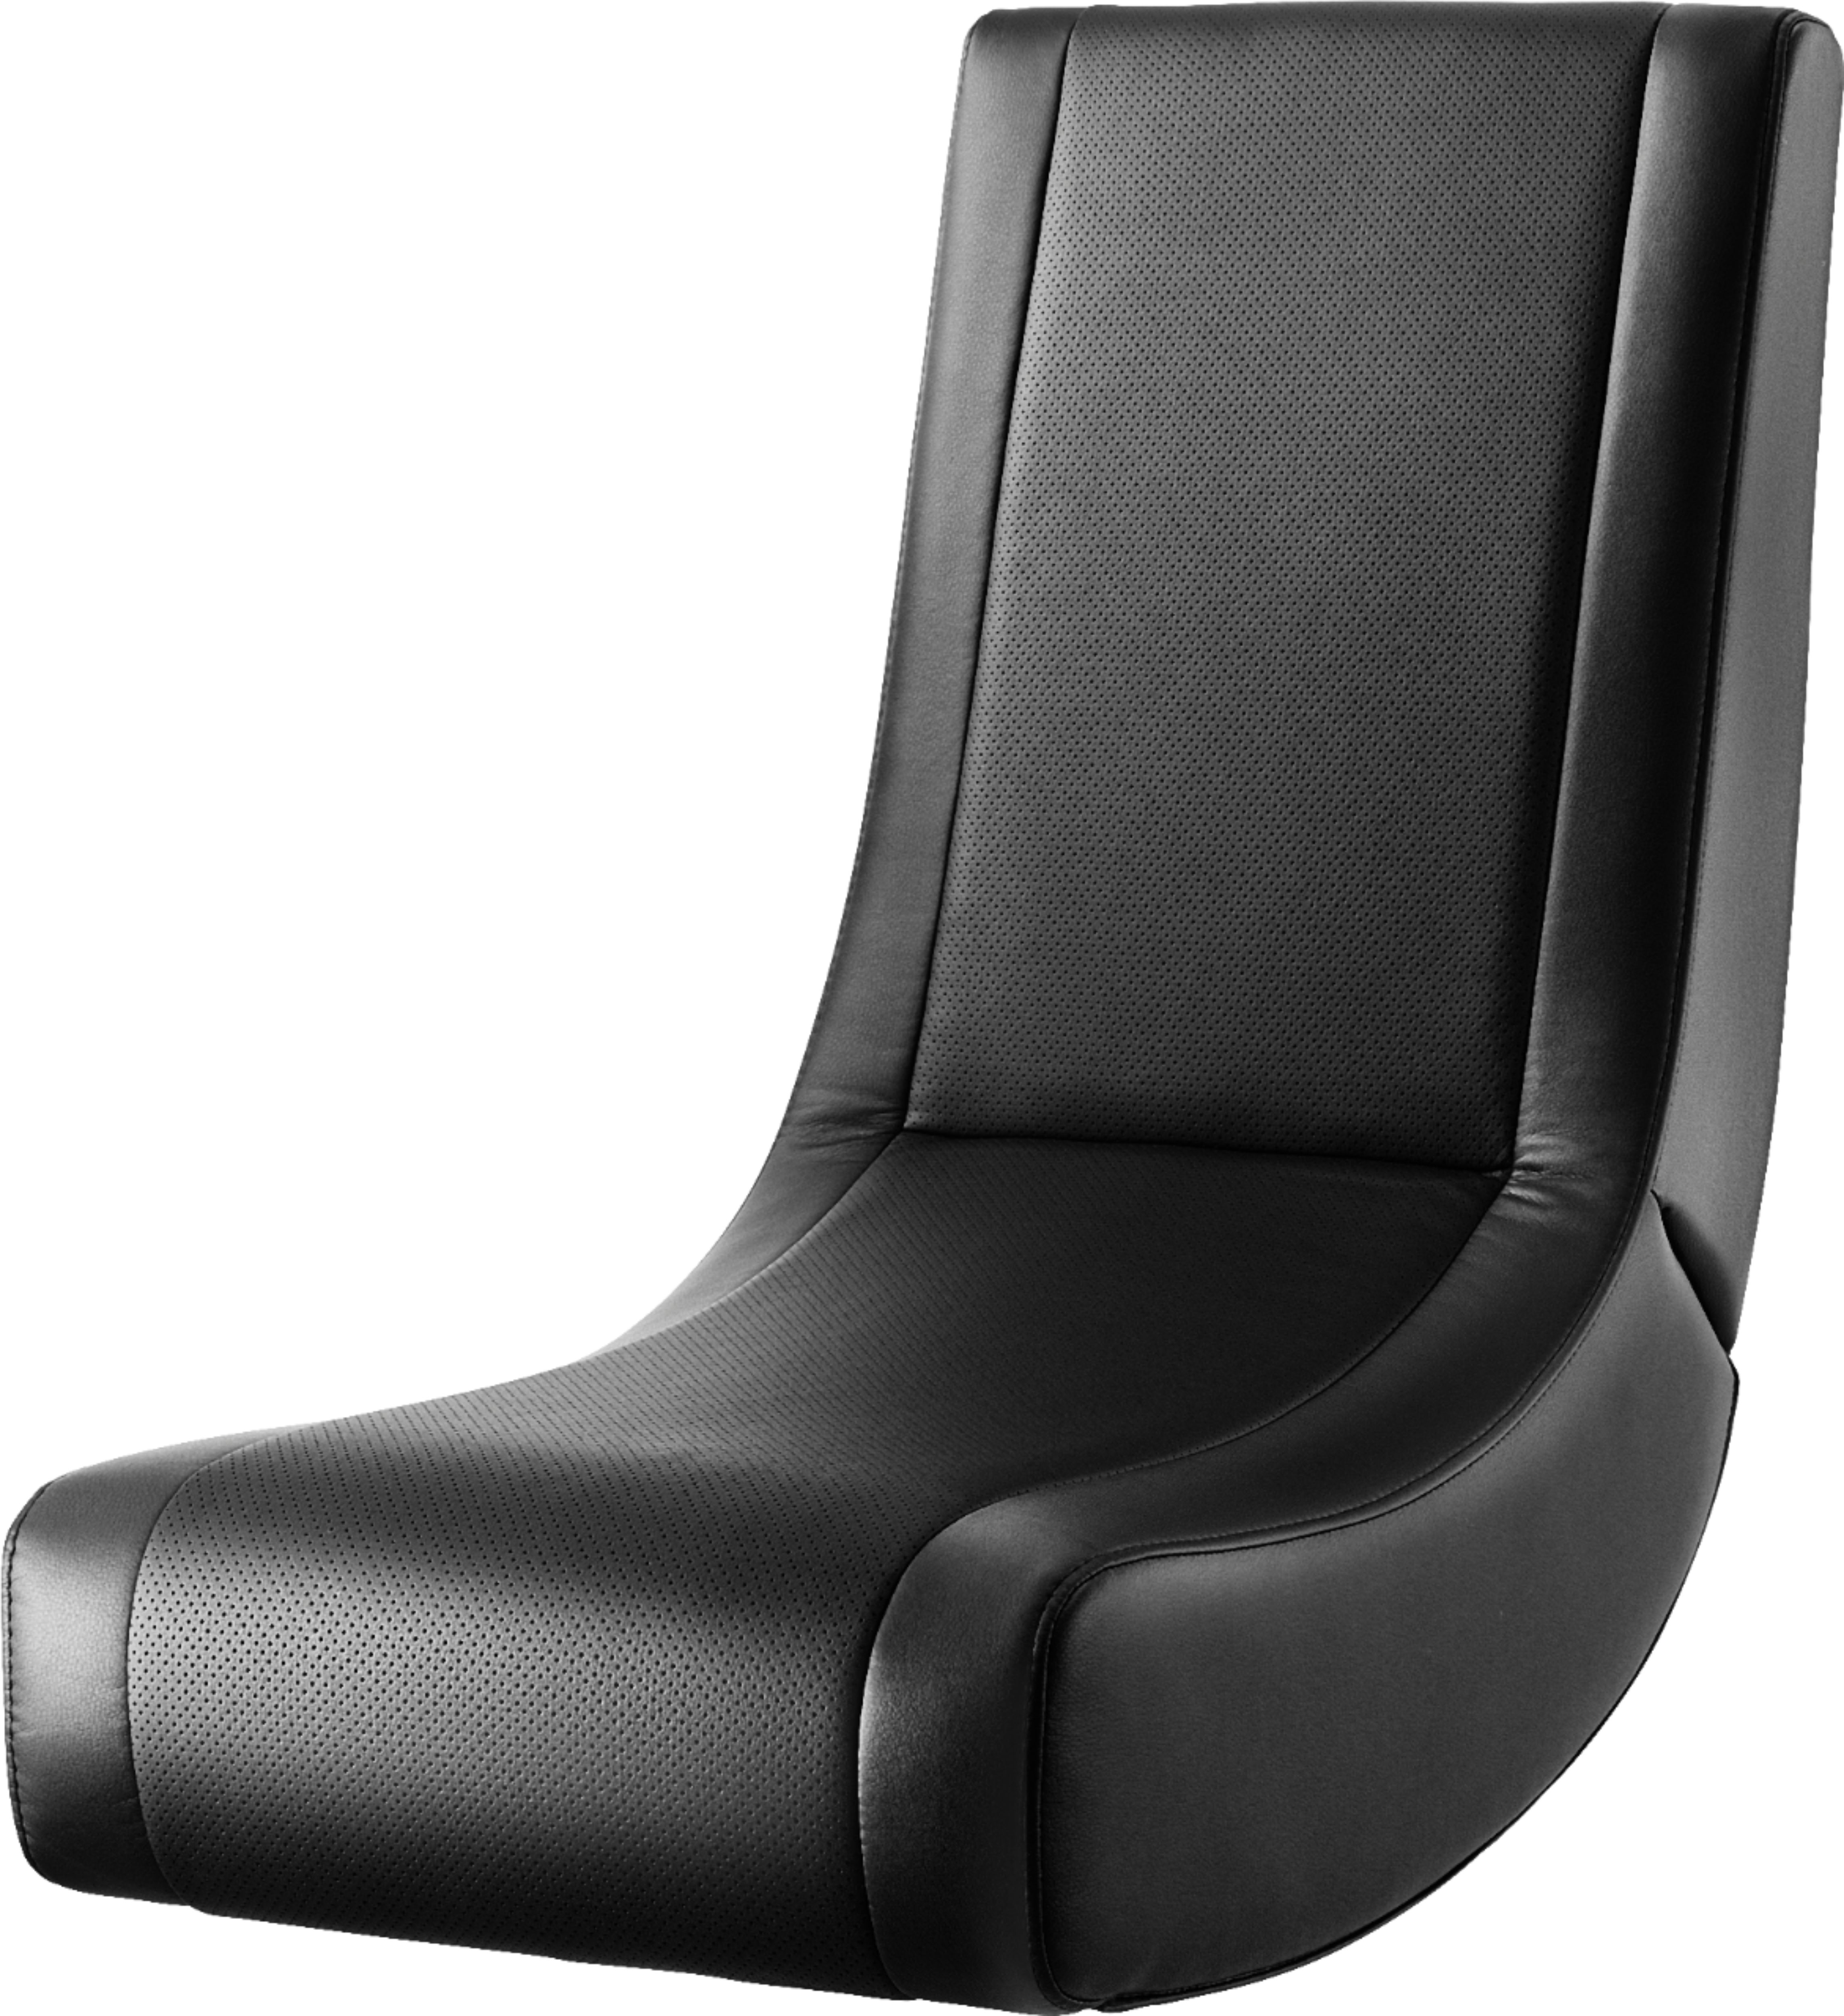 Best Buy: Insignia™ Rocker Gaming Chair Black NS-GGCH19